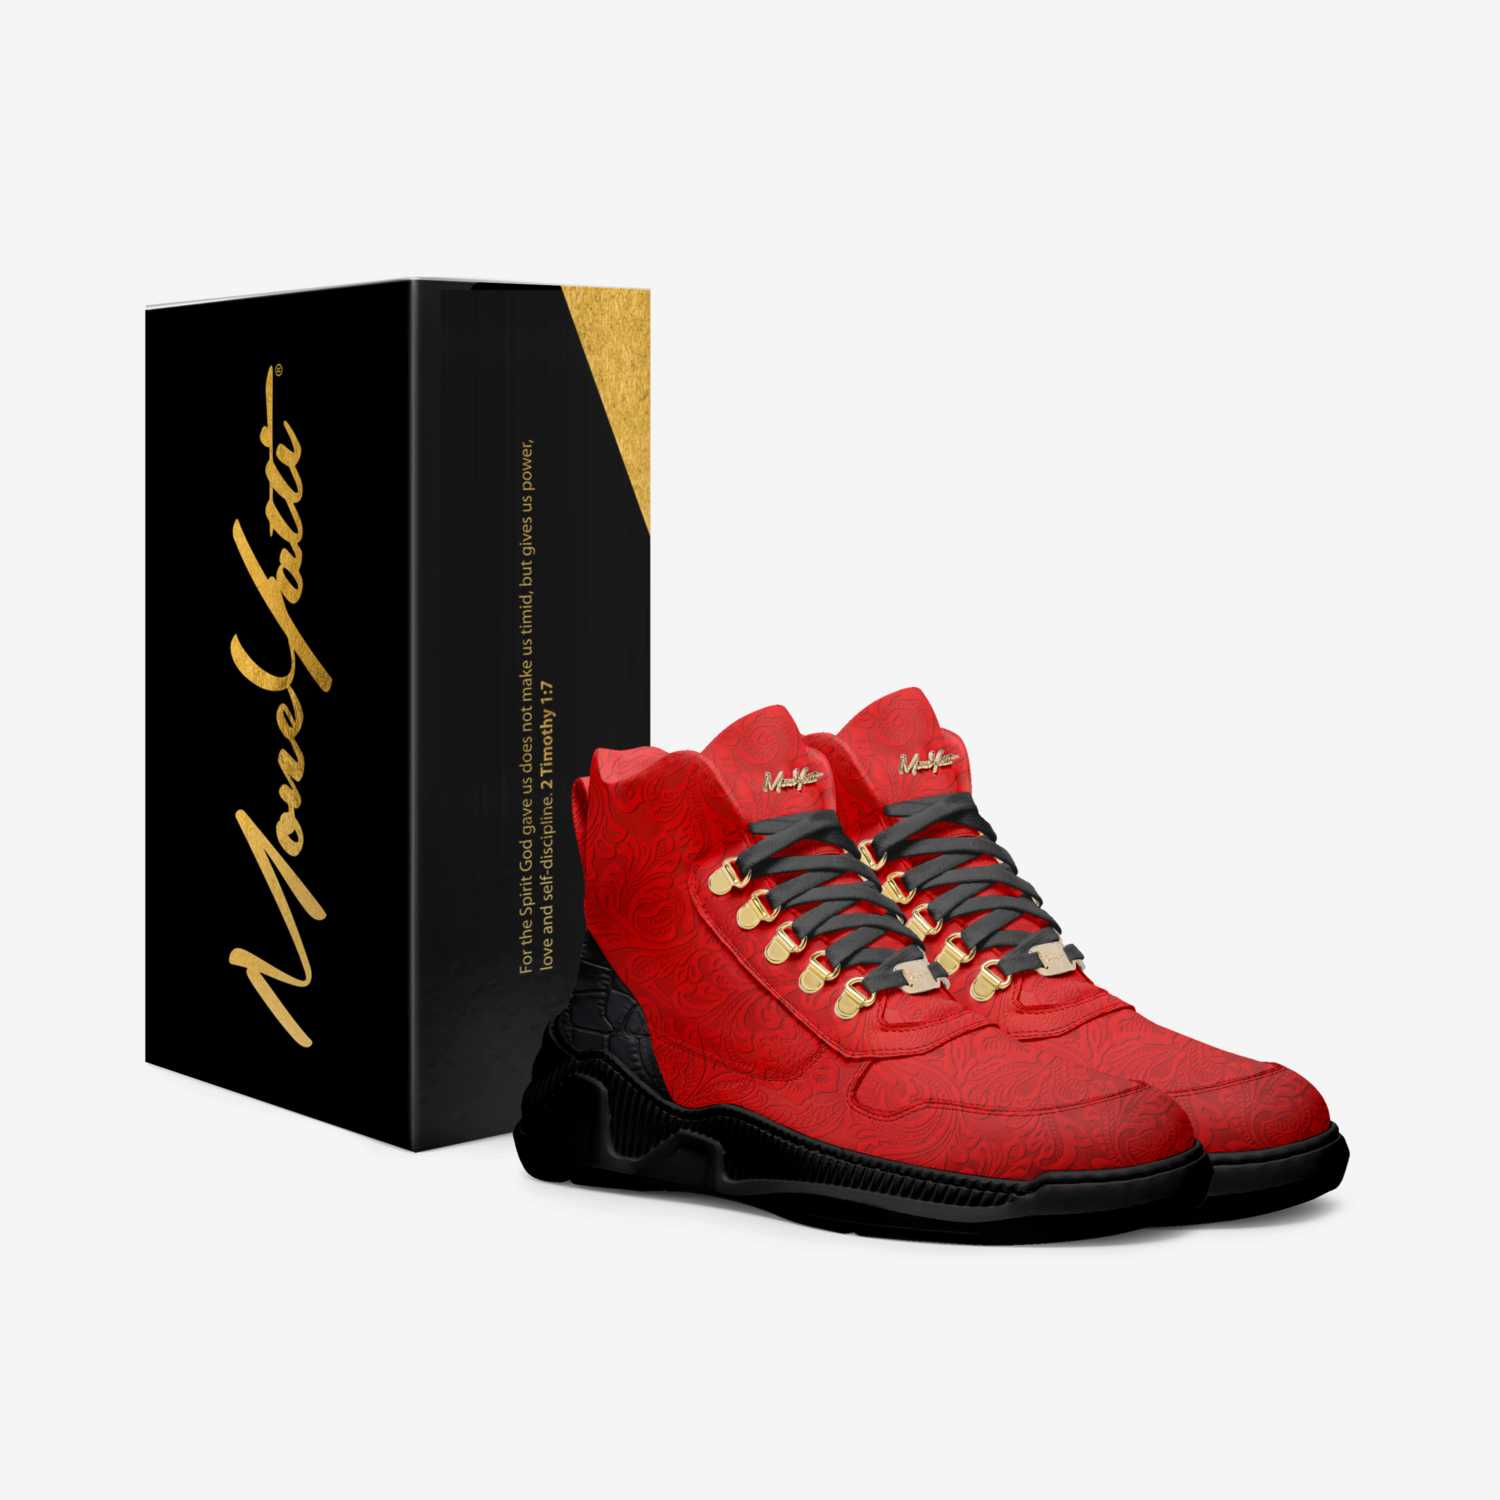 Moneyatti TrapV5 custom made in Italy shoes by Moneyatti Brand | Box view